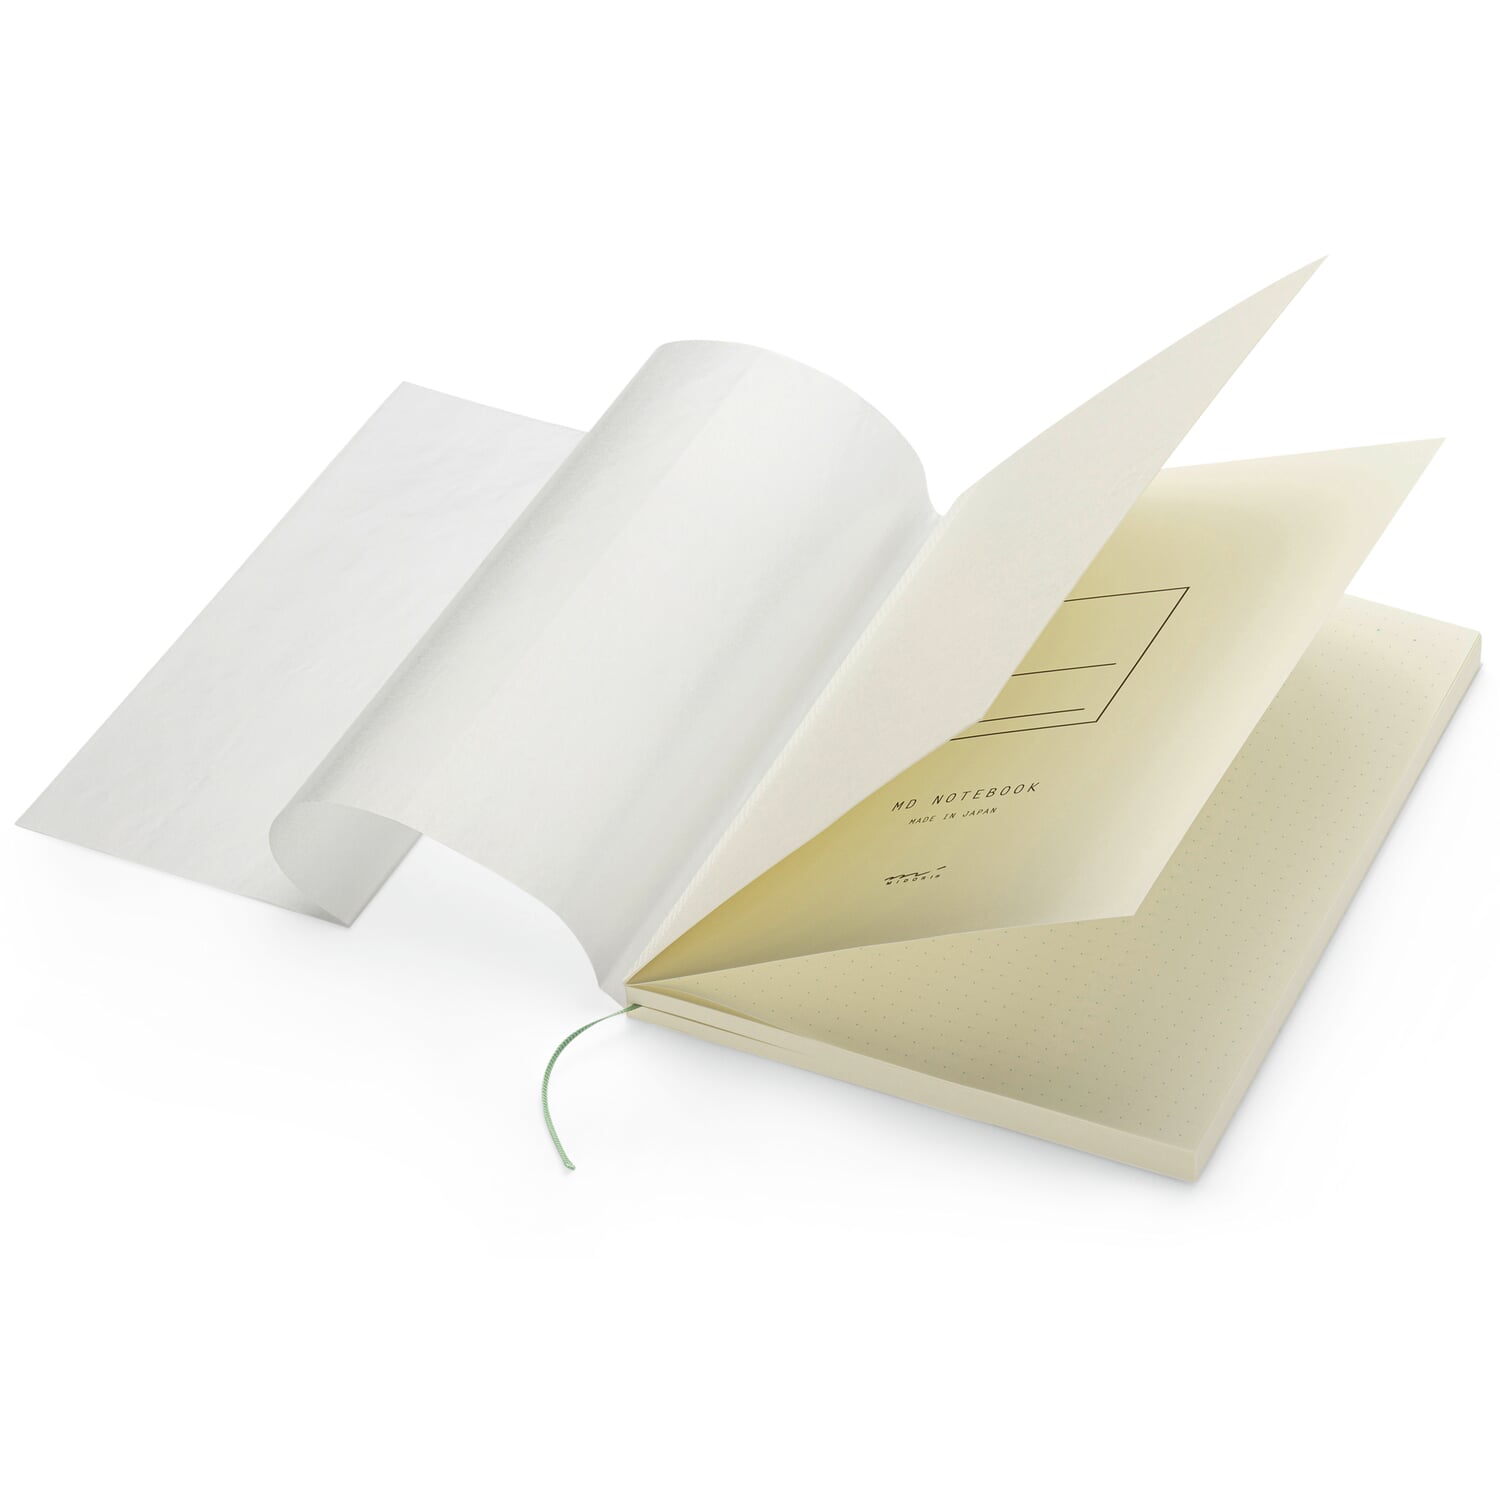 book binding gauze, book binding gauze Suppliers and Manufacturers at